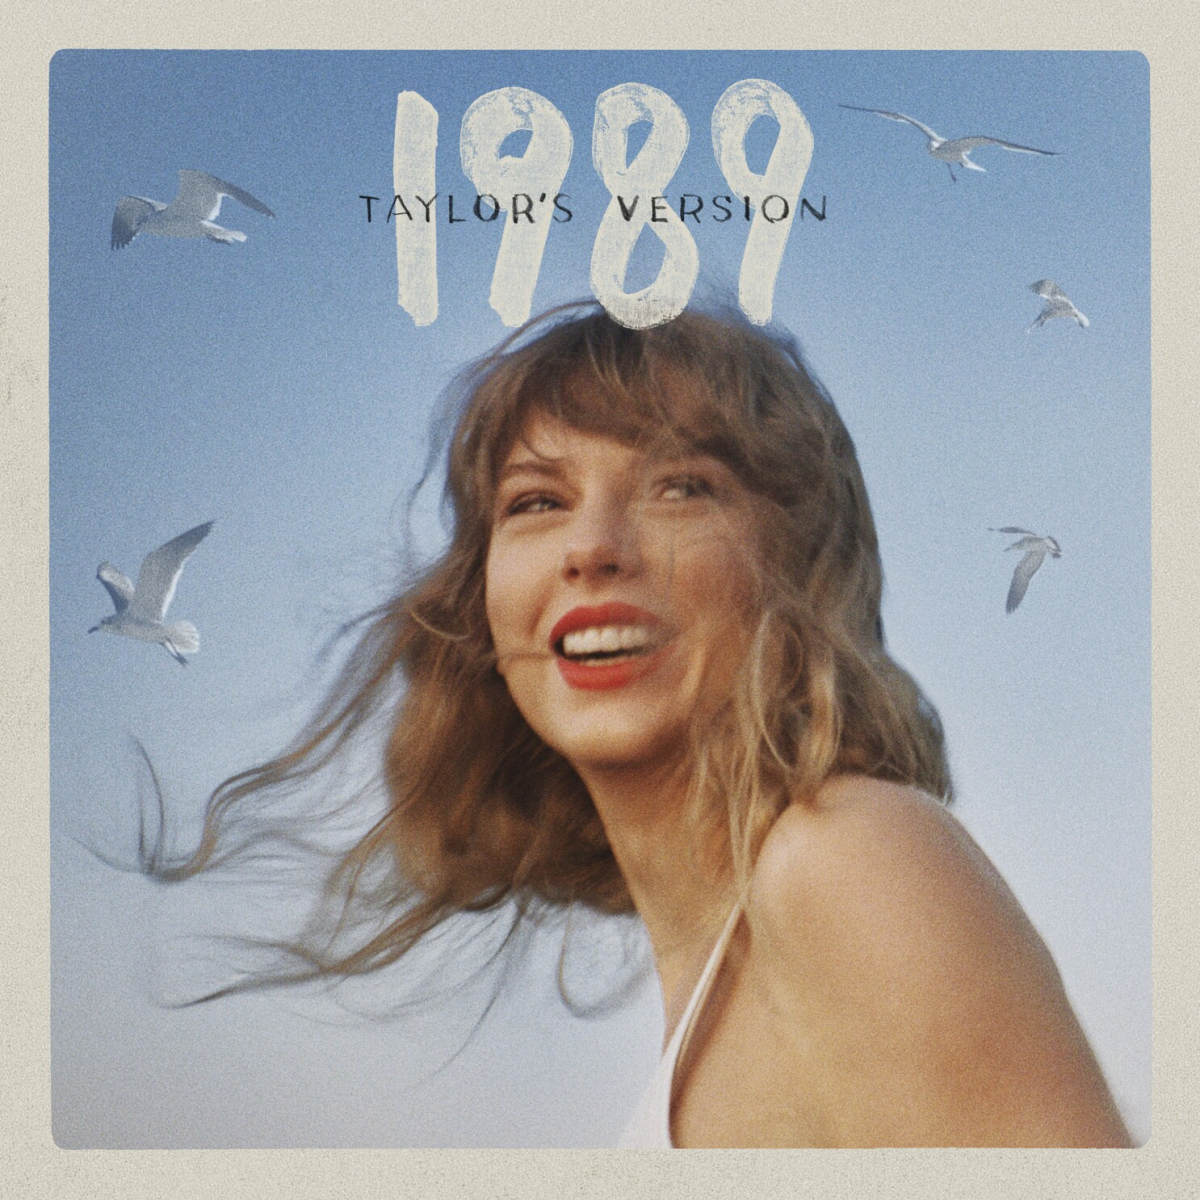 ‘1989 (Taylor’s Version)’ serves up brilliant vault tracks, timeless pop